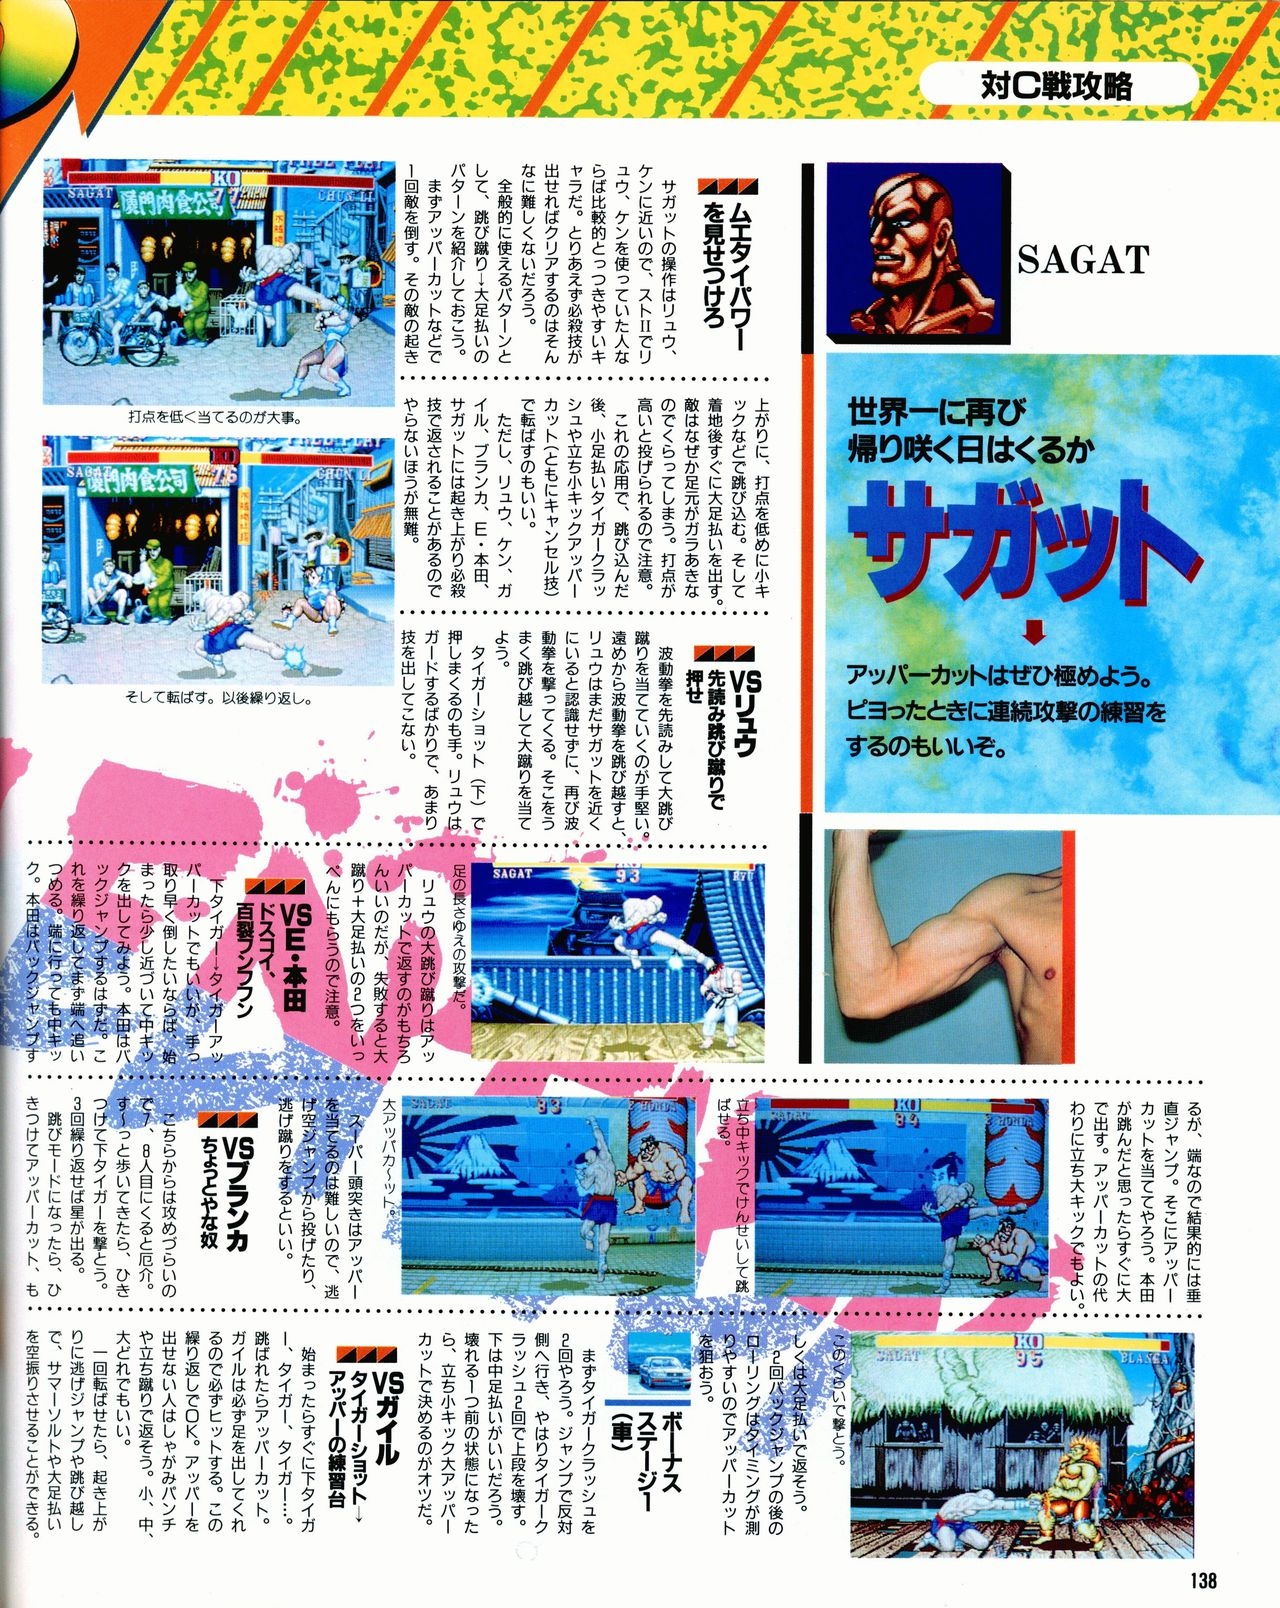 Street Fighter II Dash - Gamest special issue 77 139